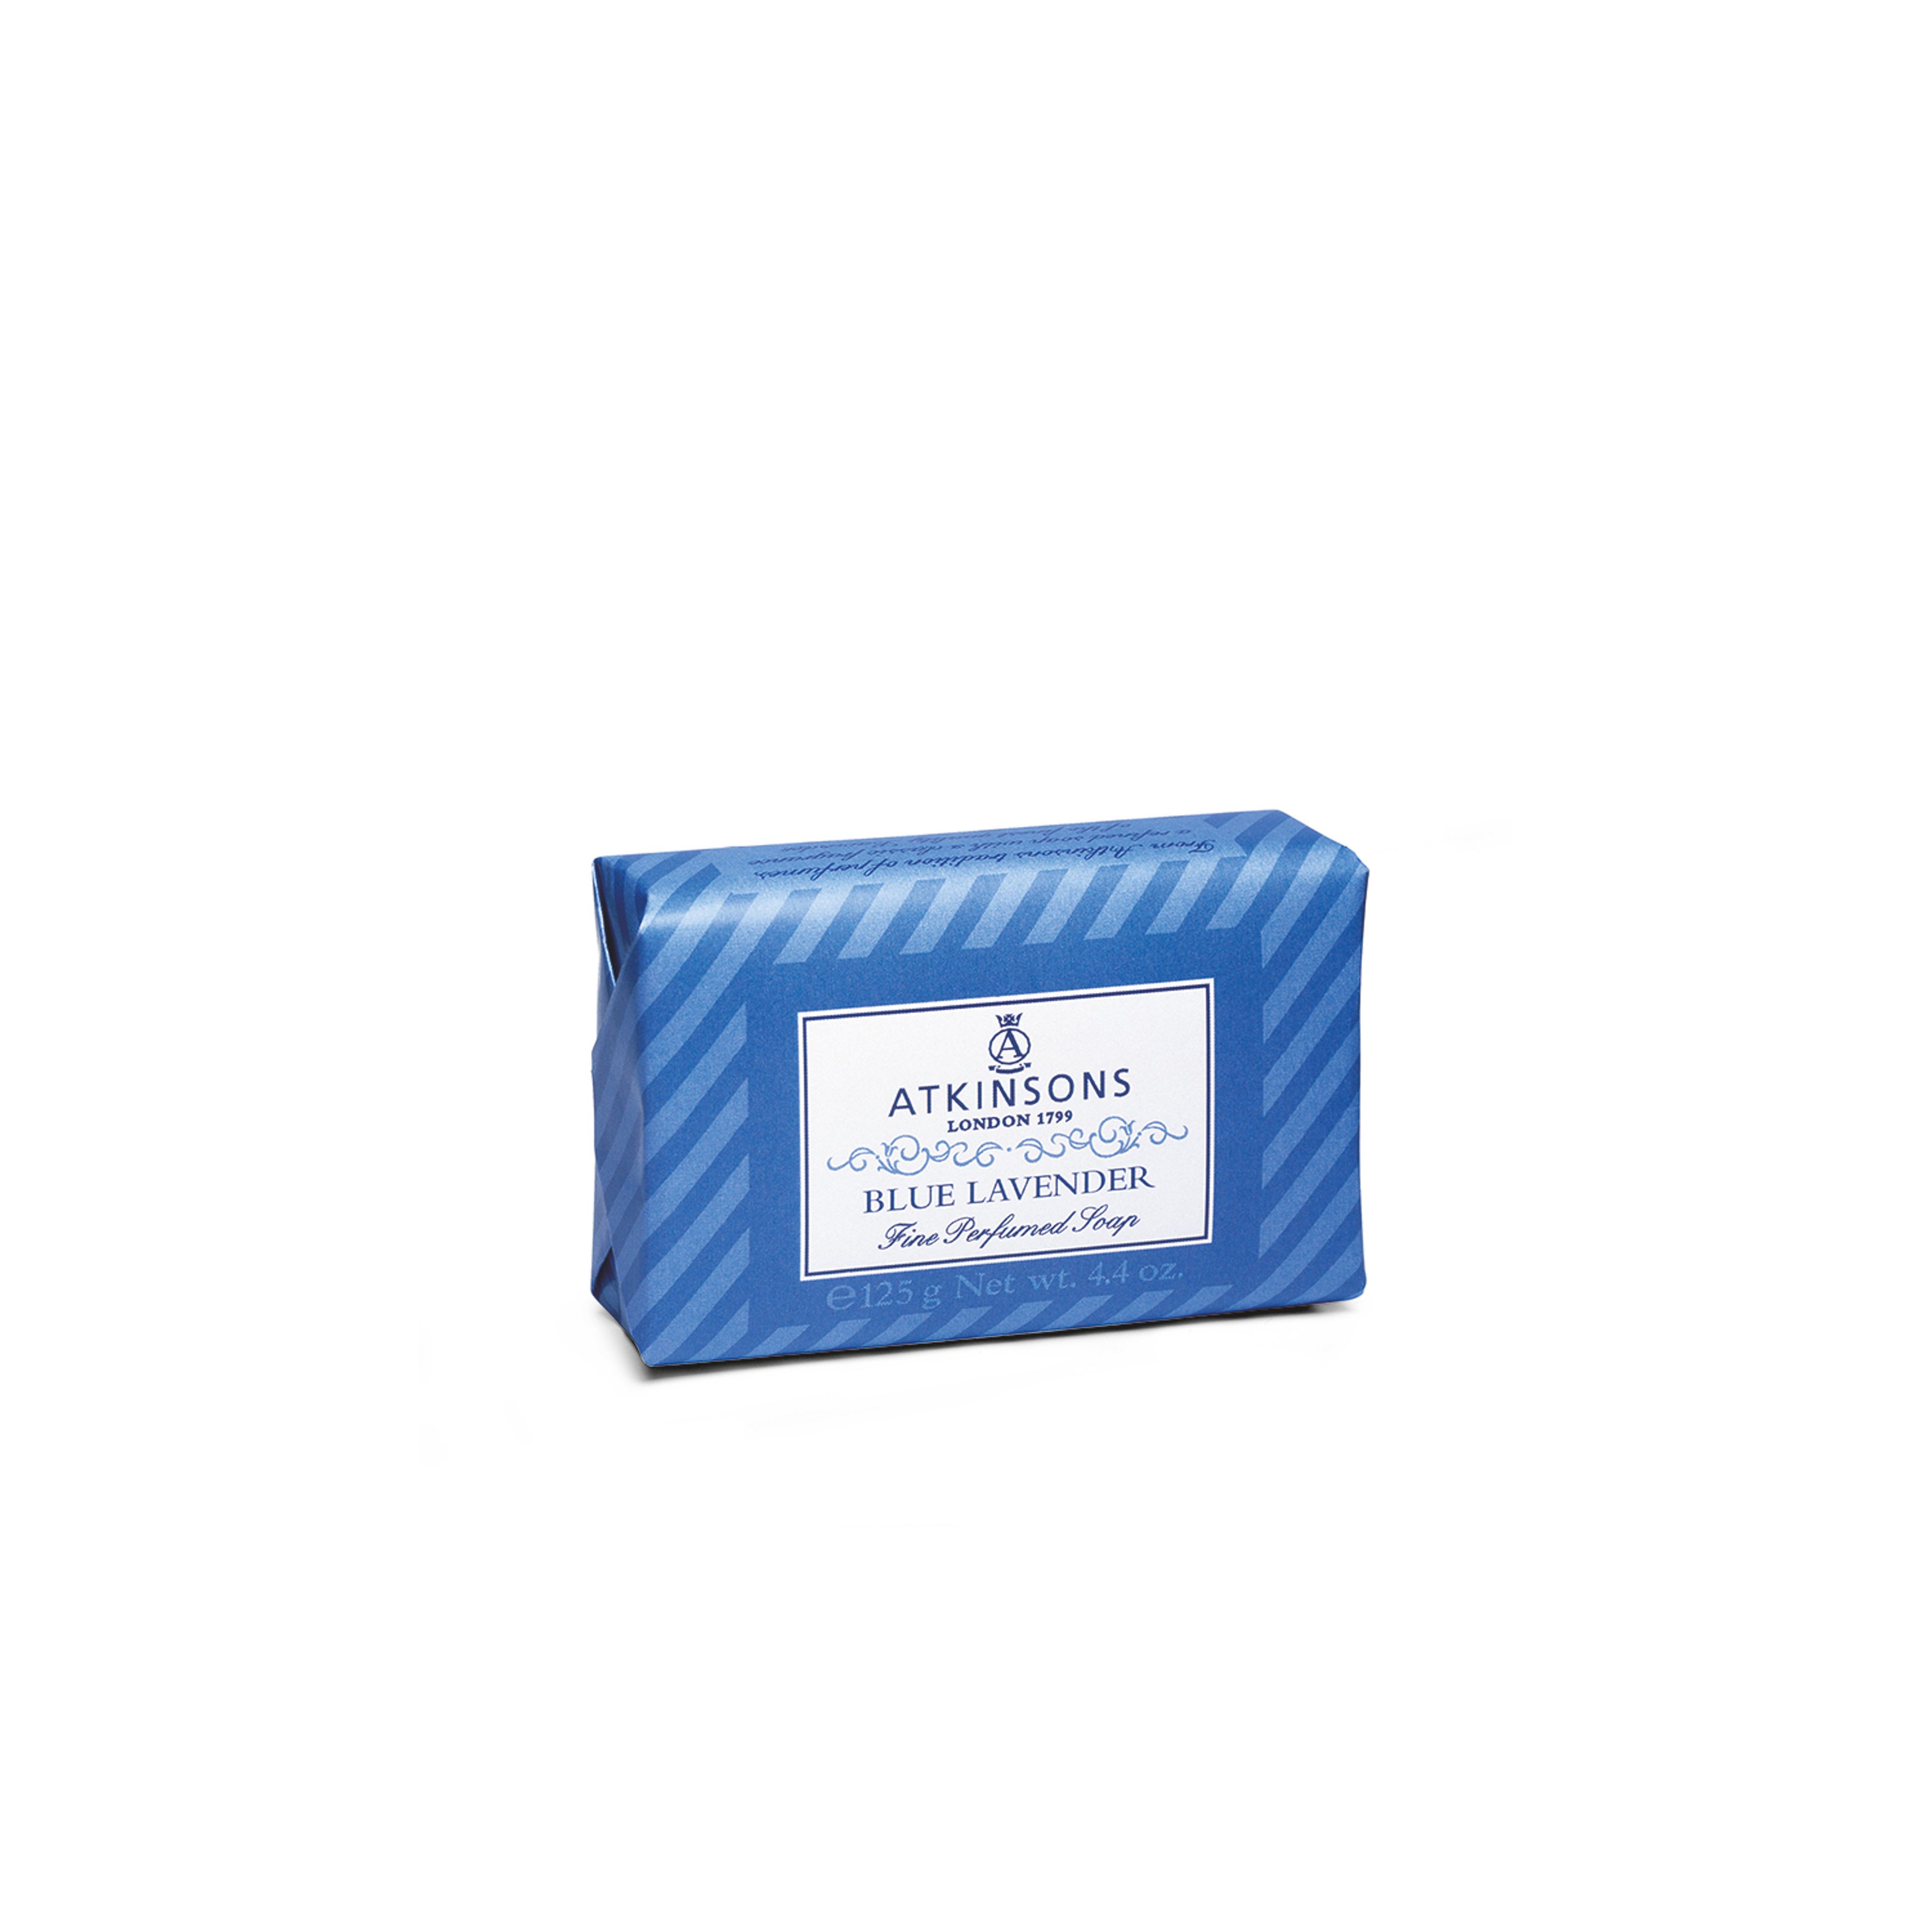 Atkinsons Fine Perfumed Soap-blue Lavander 1